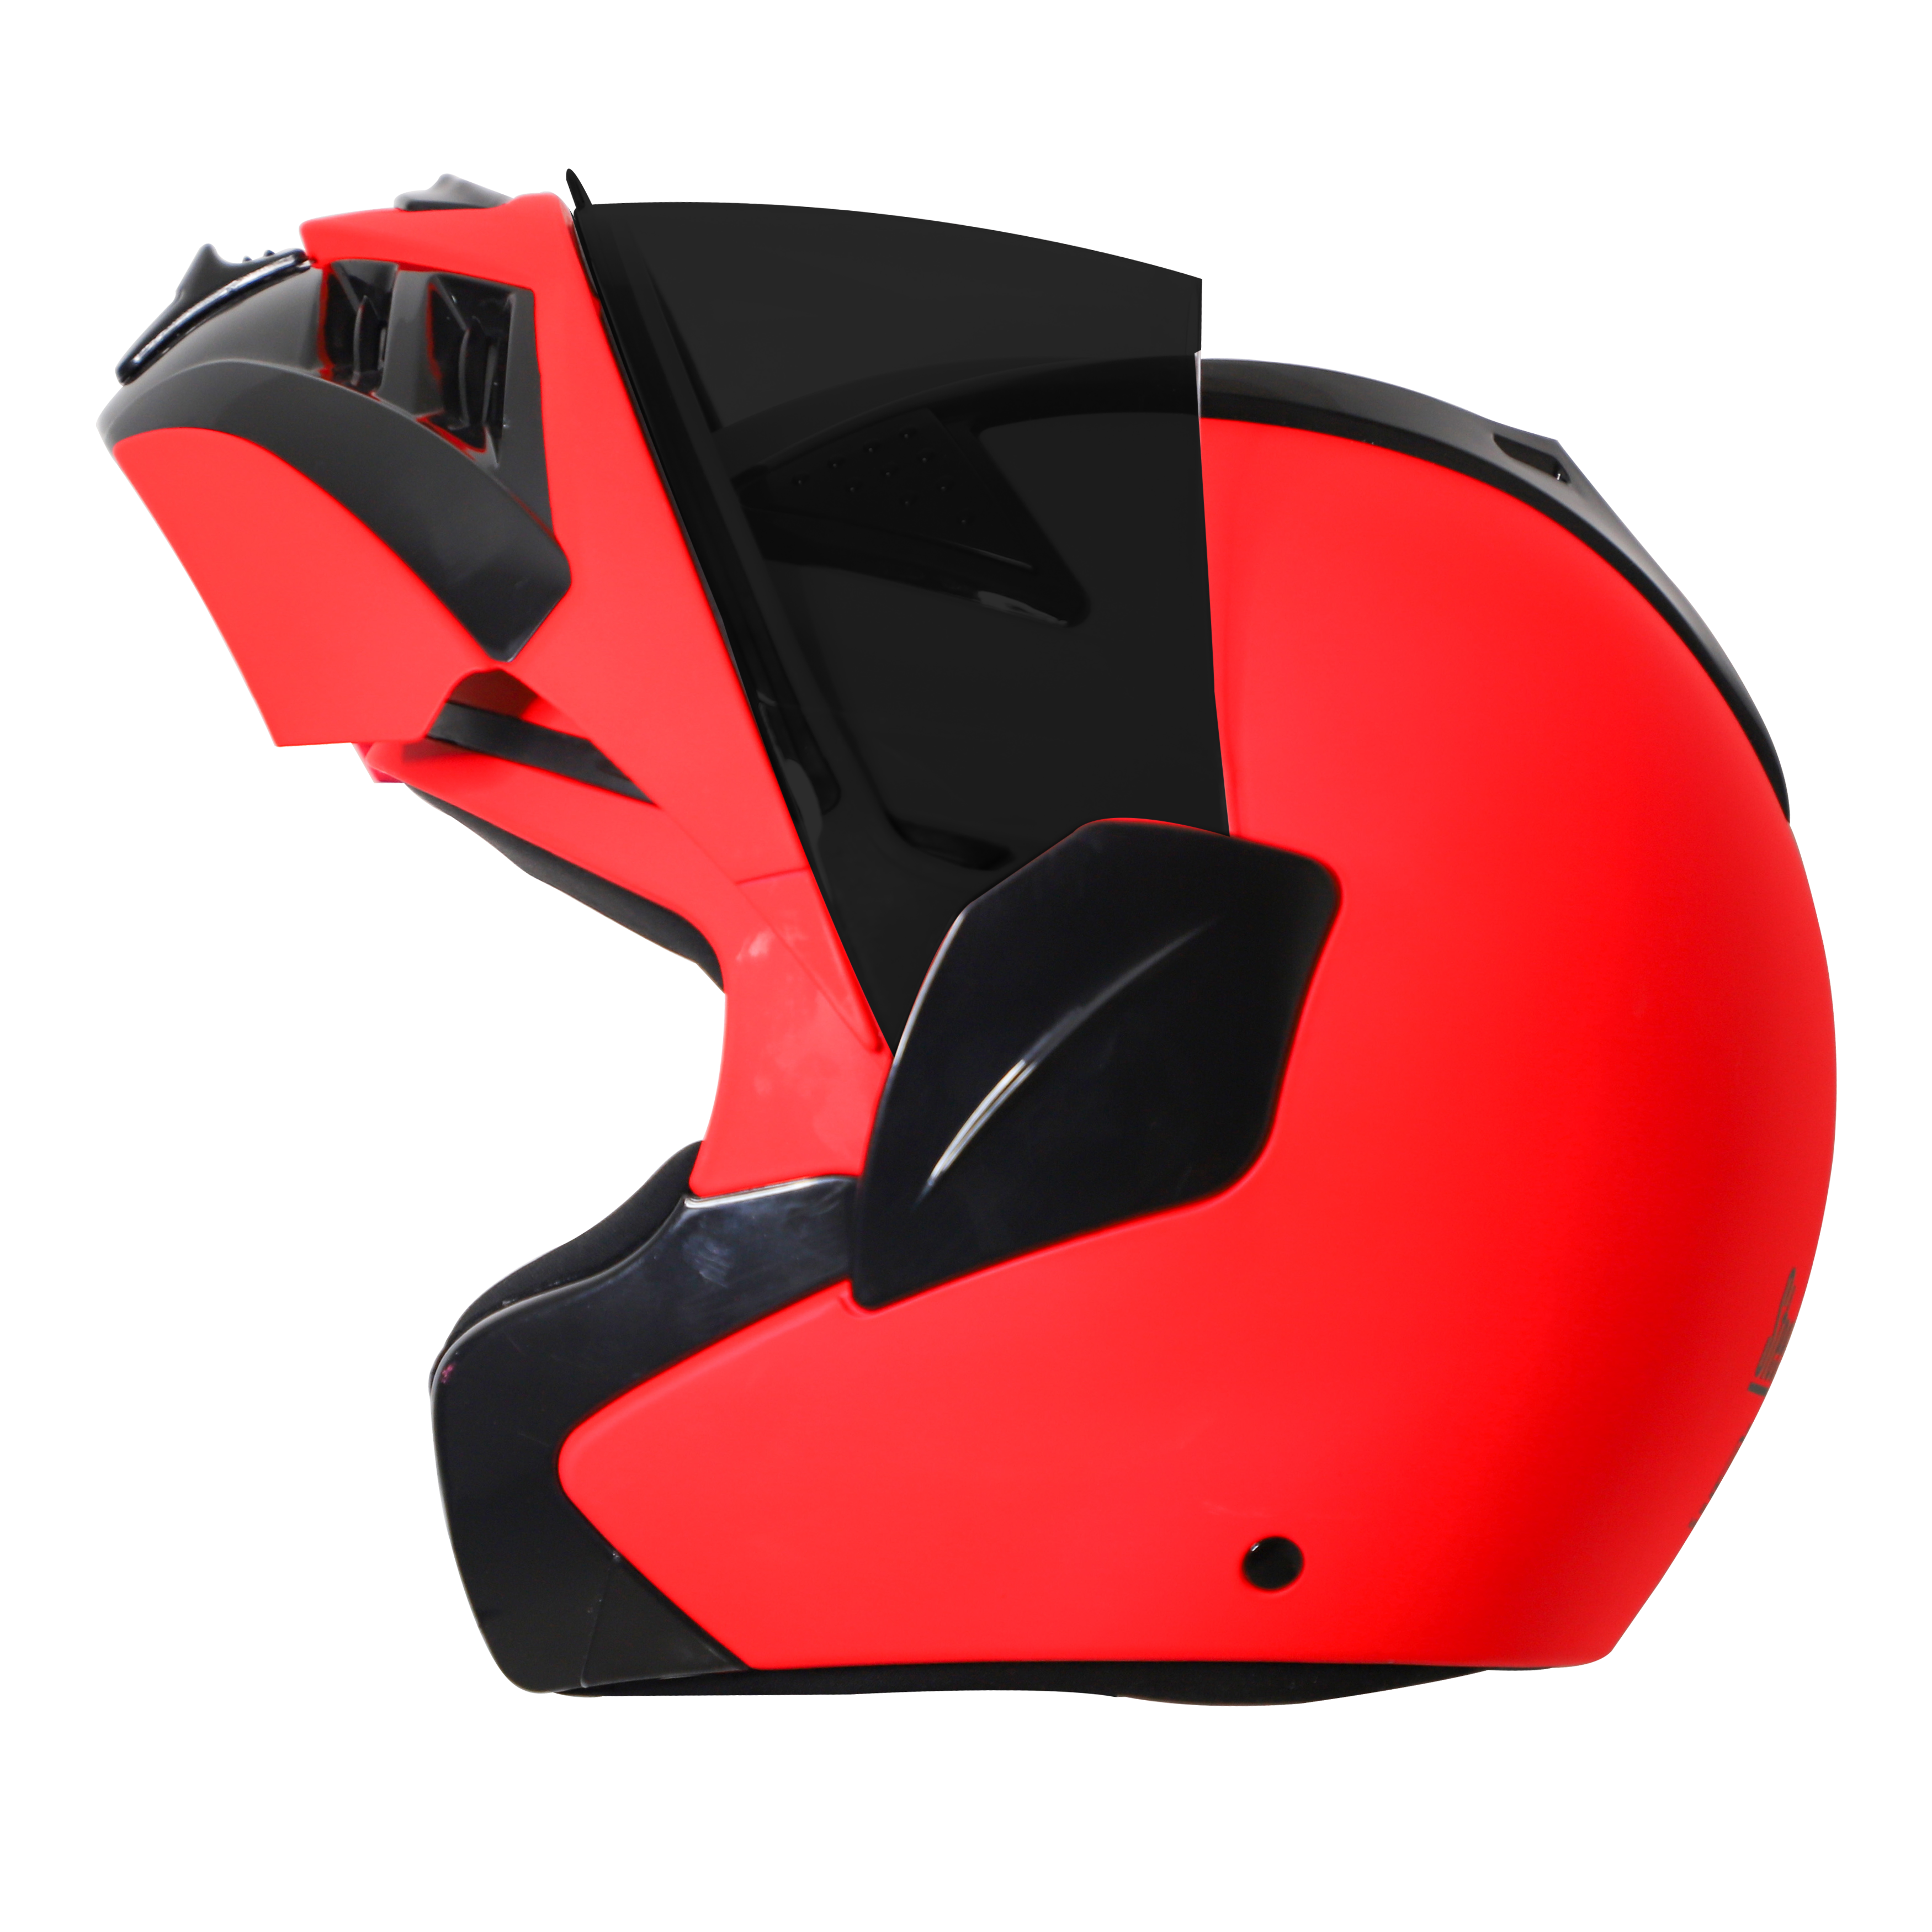 Steelbird SB-34 ISI Certified Flip-Up Helmet For Men And Women (Glossy Fluo Watermelon With Smoke Visor)